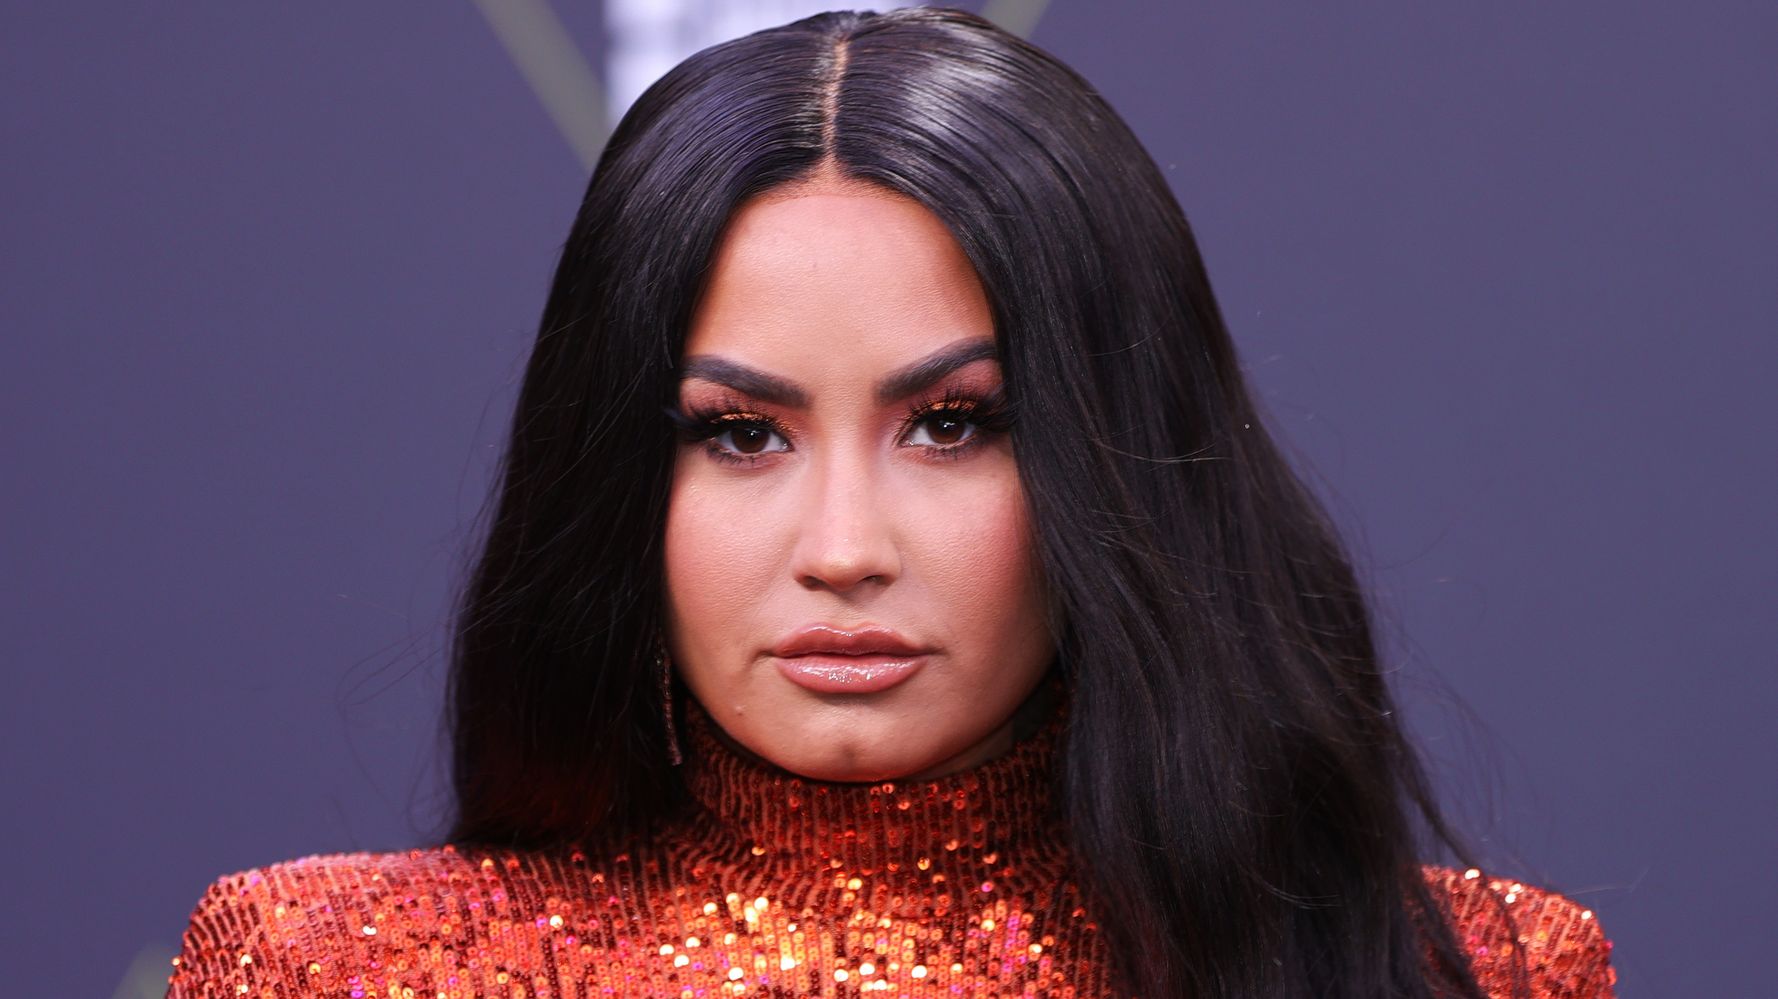 Demi Lovato says she suffered heart attack, strokes and brain damage due to overdose